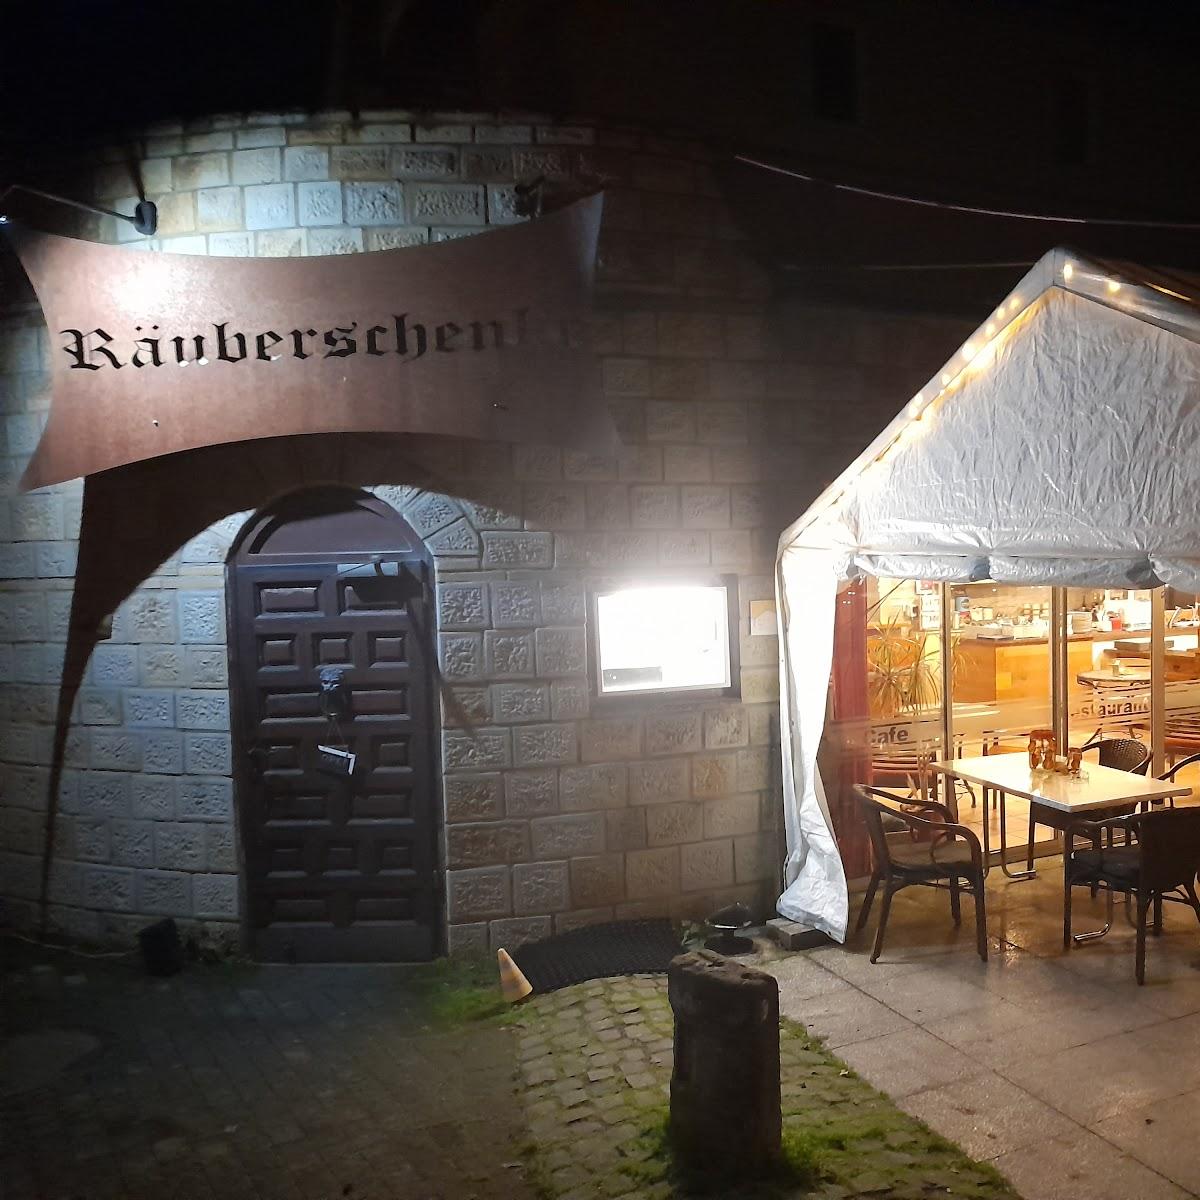 Restaurant "Restaurant Haumühle" in Simmertal